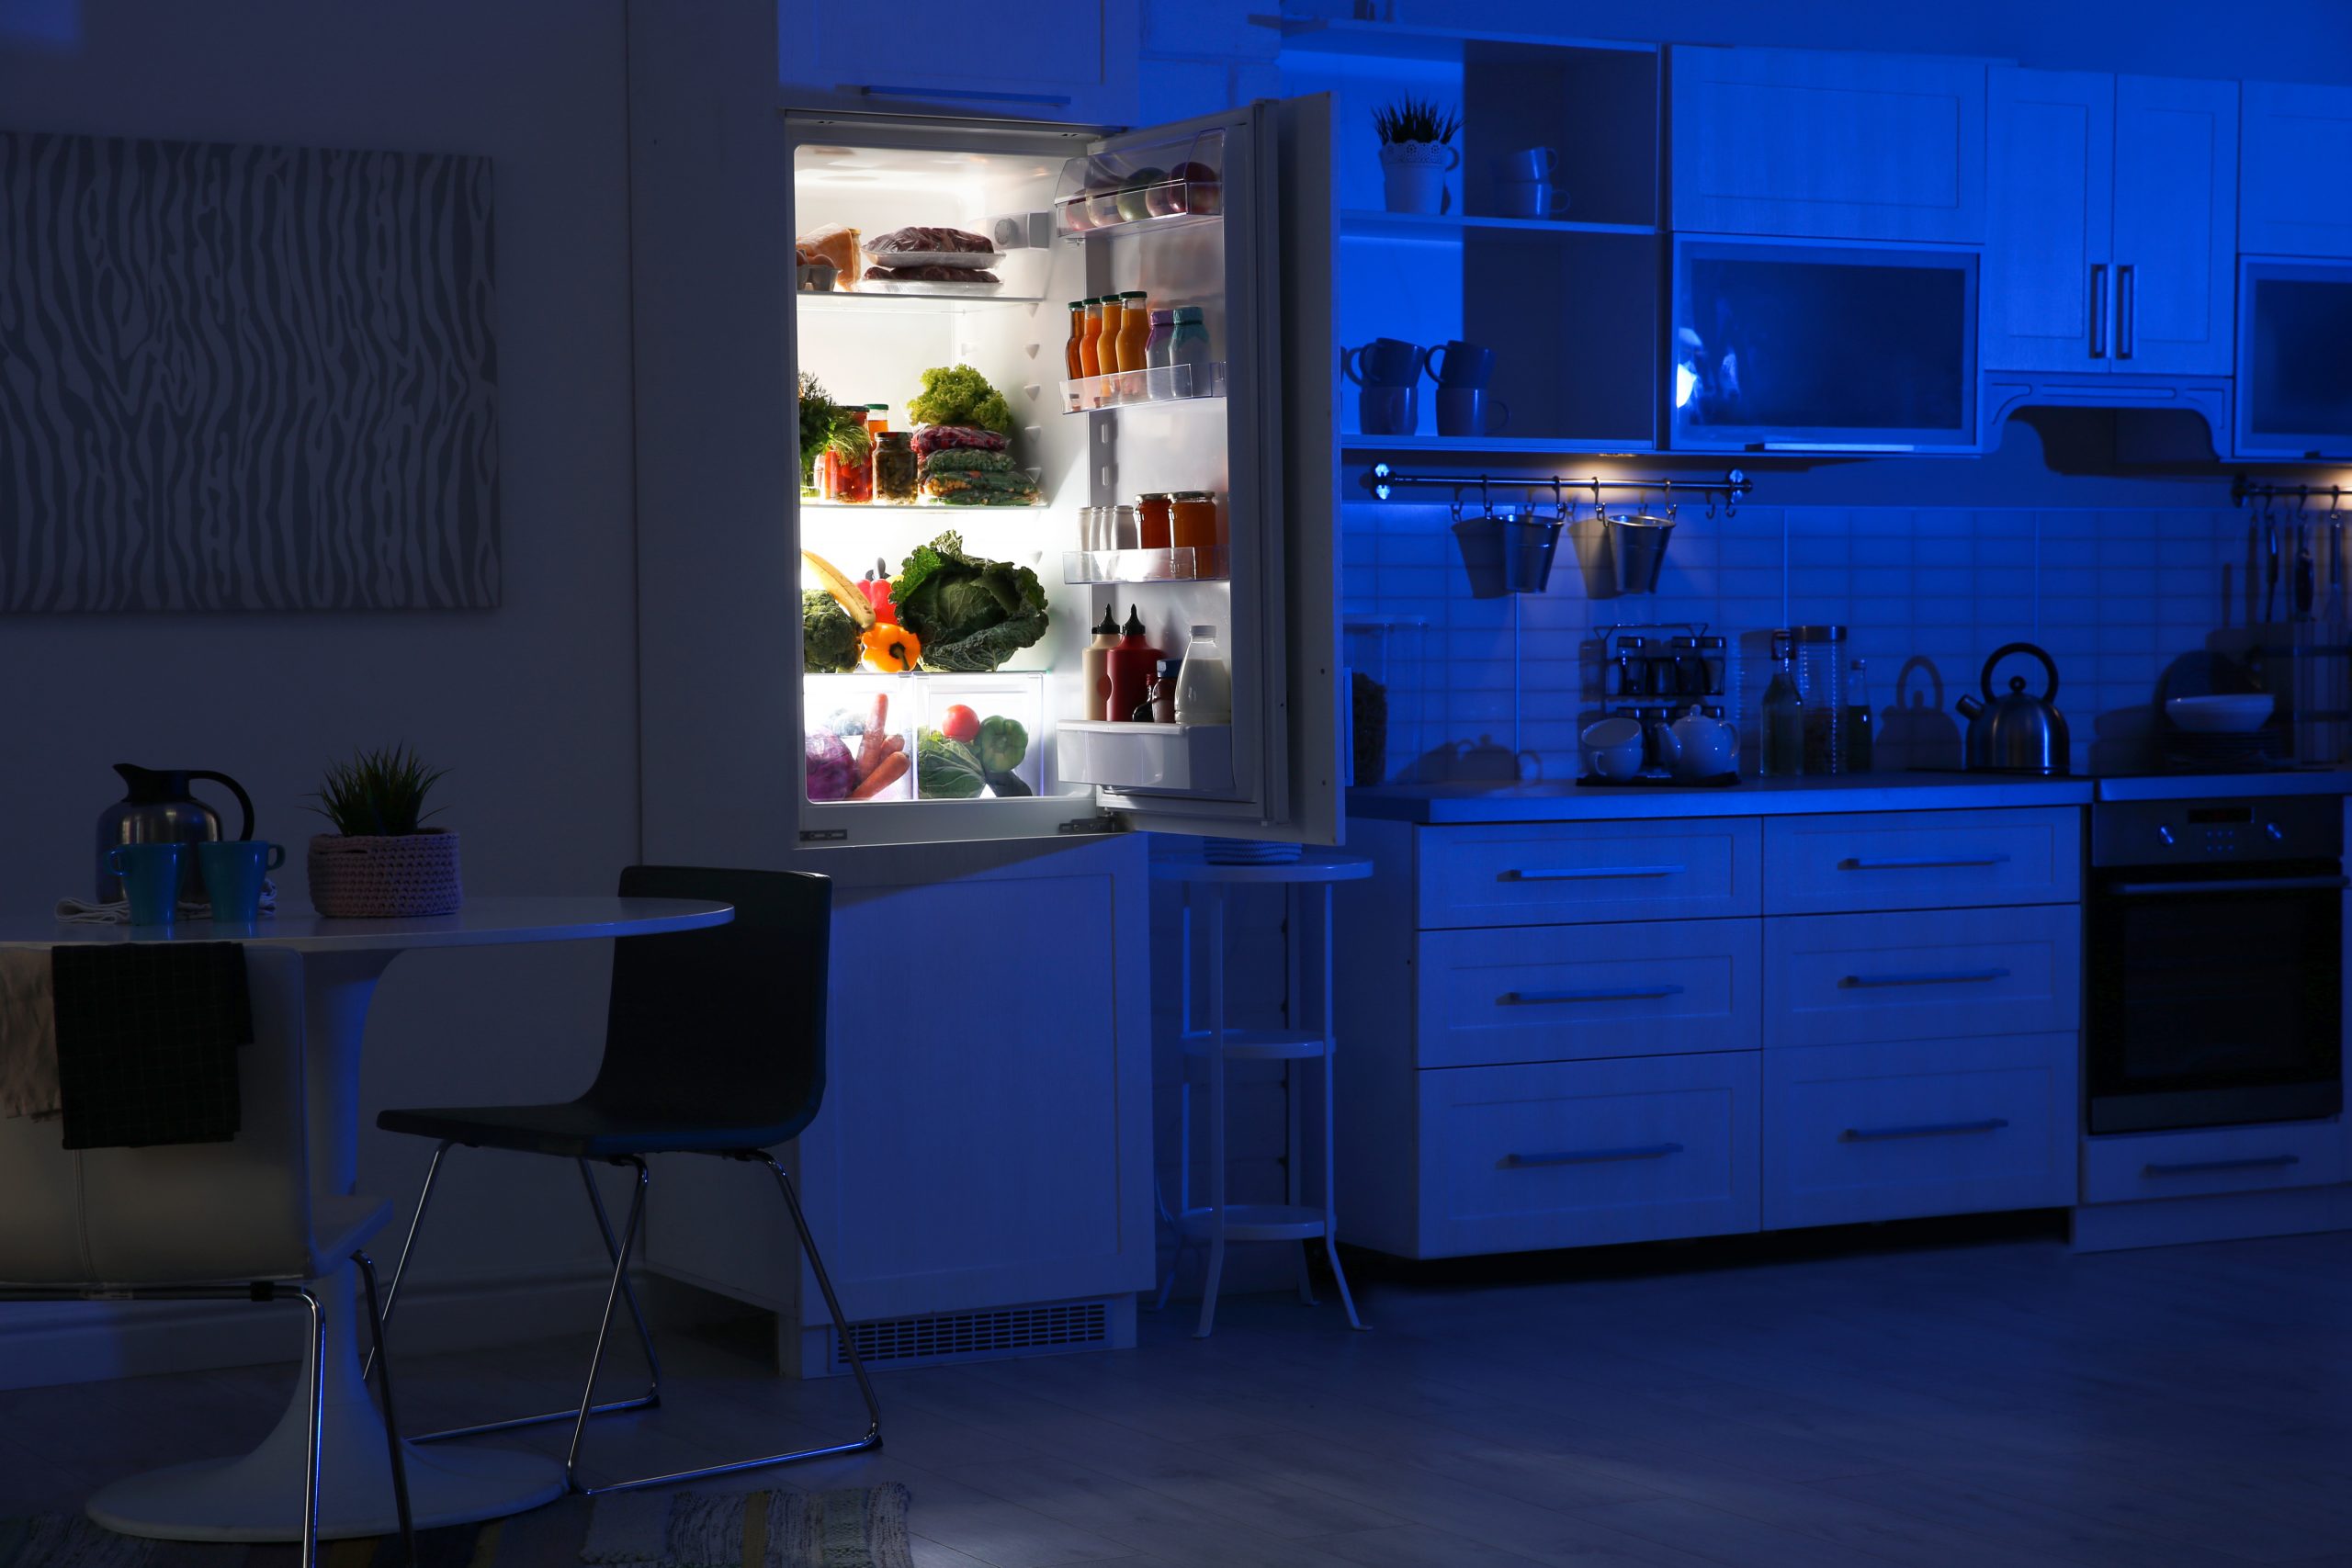 night light air freshener kitchen